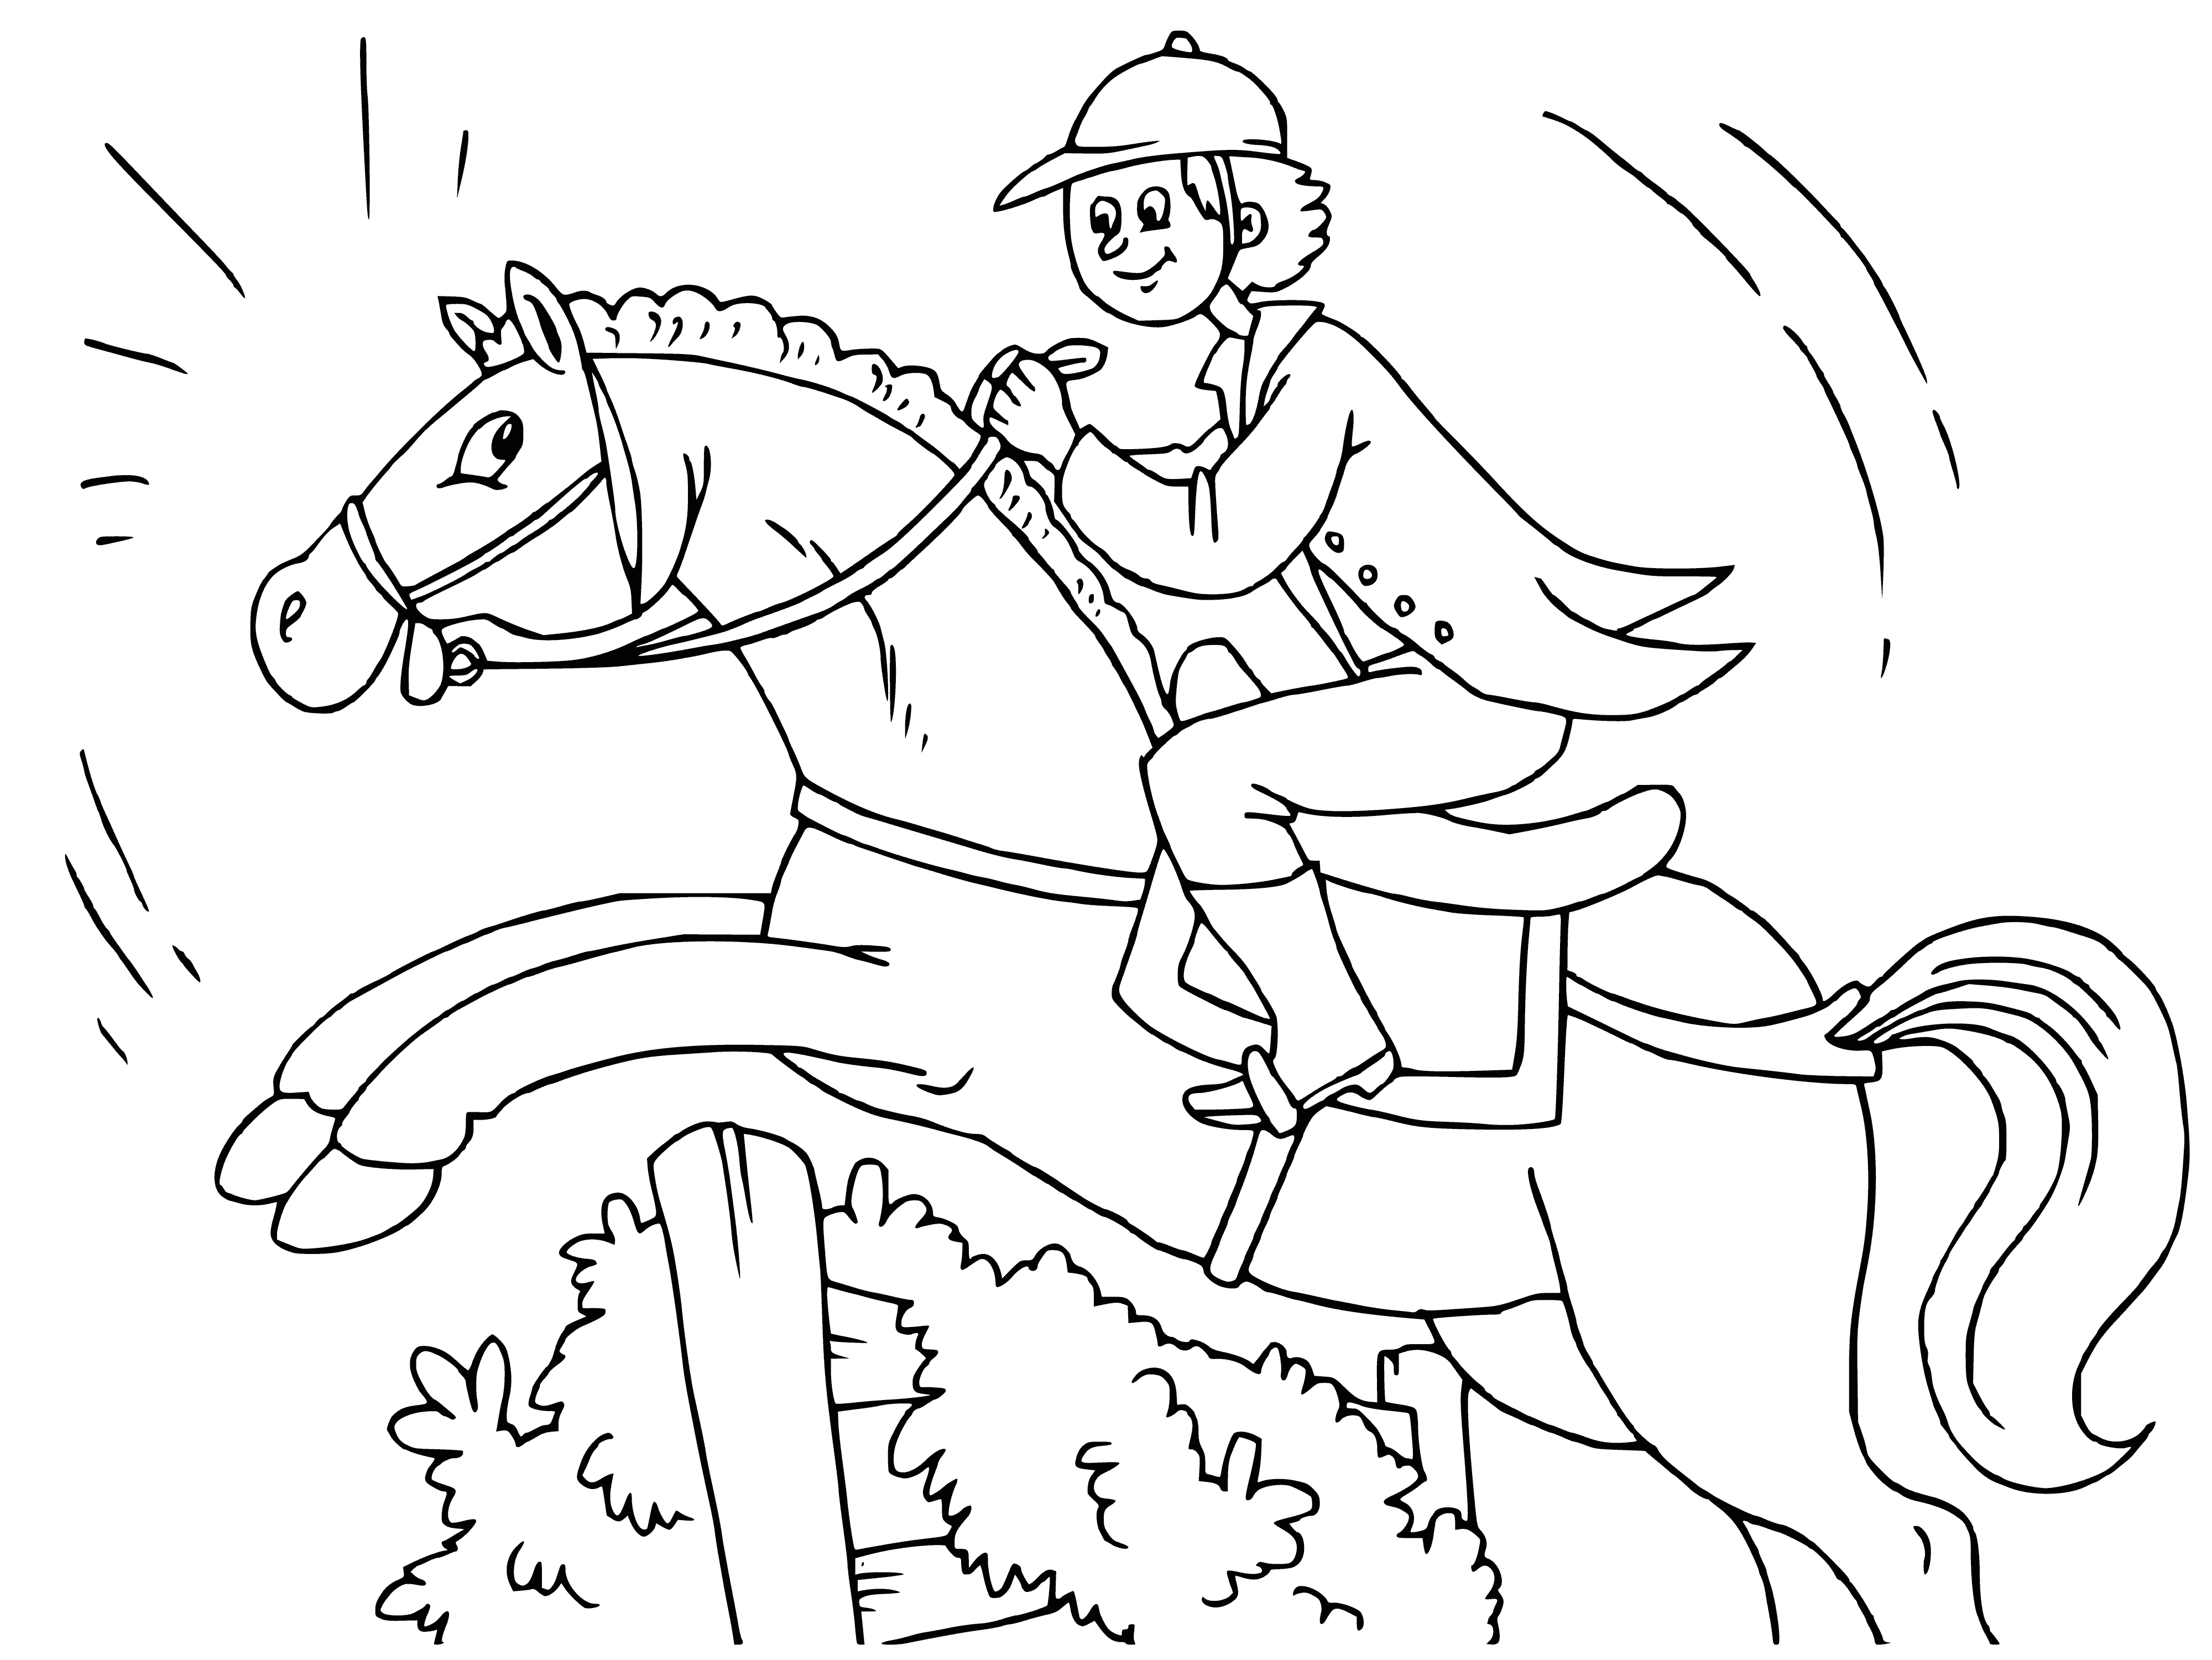 Horseback Riding coloring page